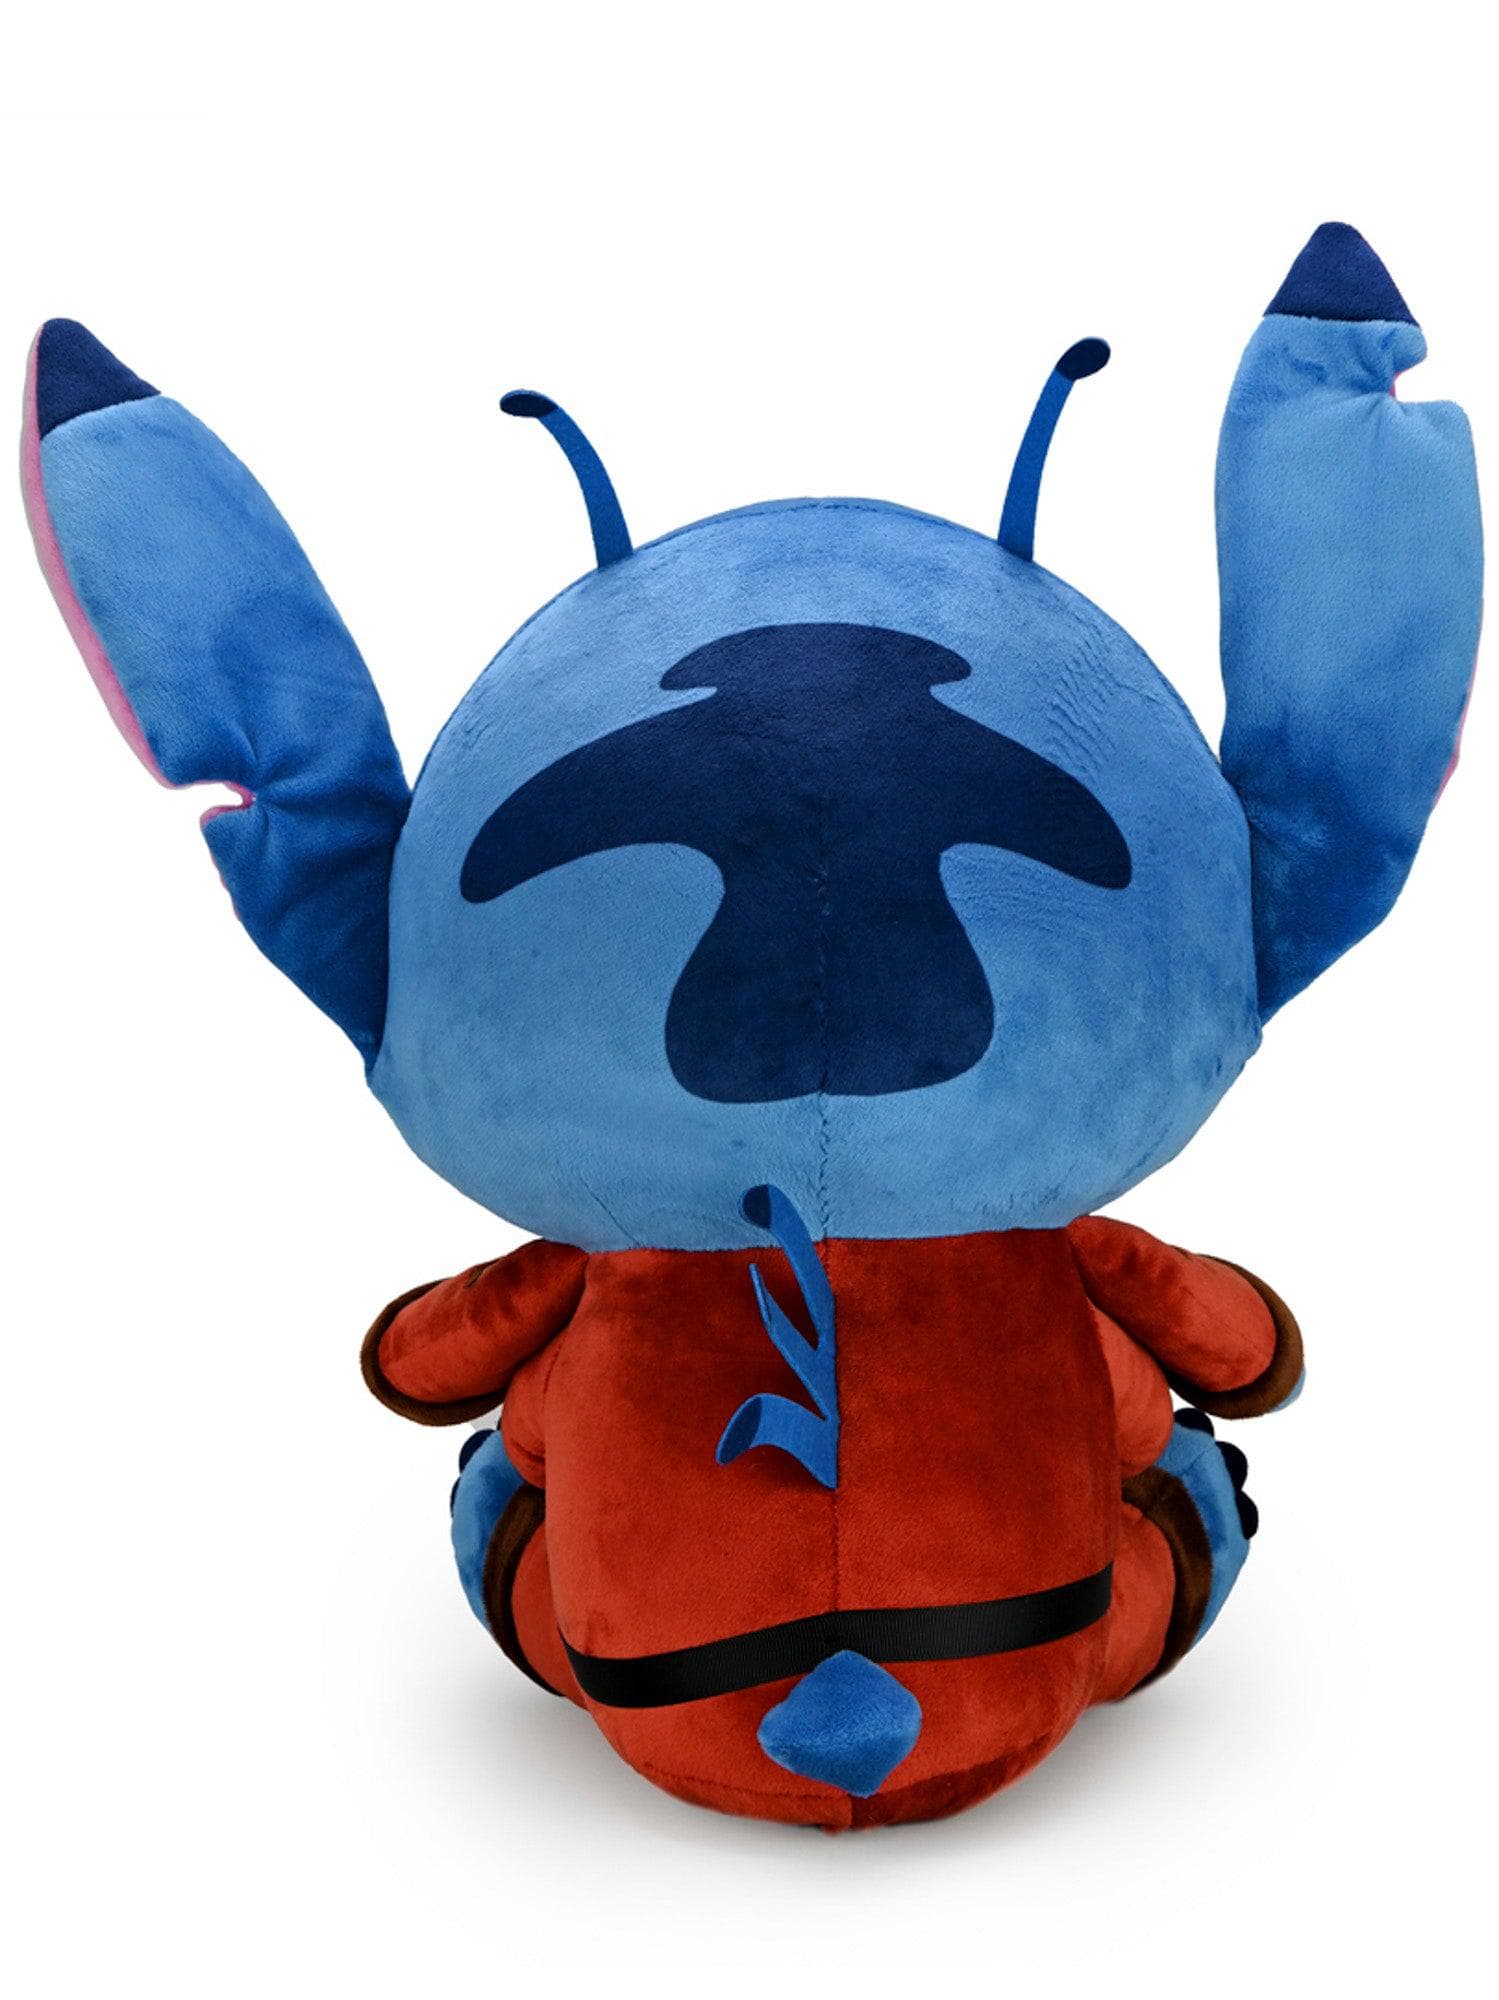 Lilo and Stitch - Kidrobot